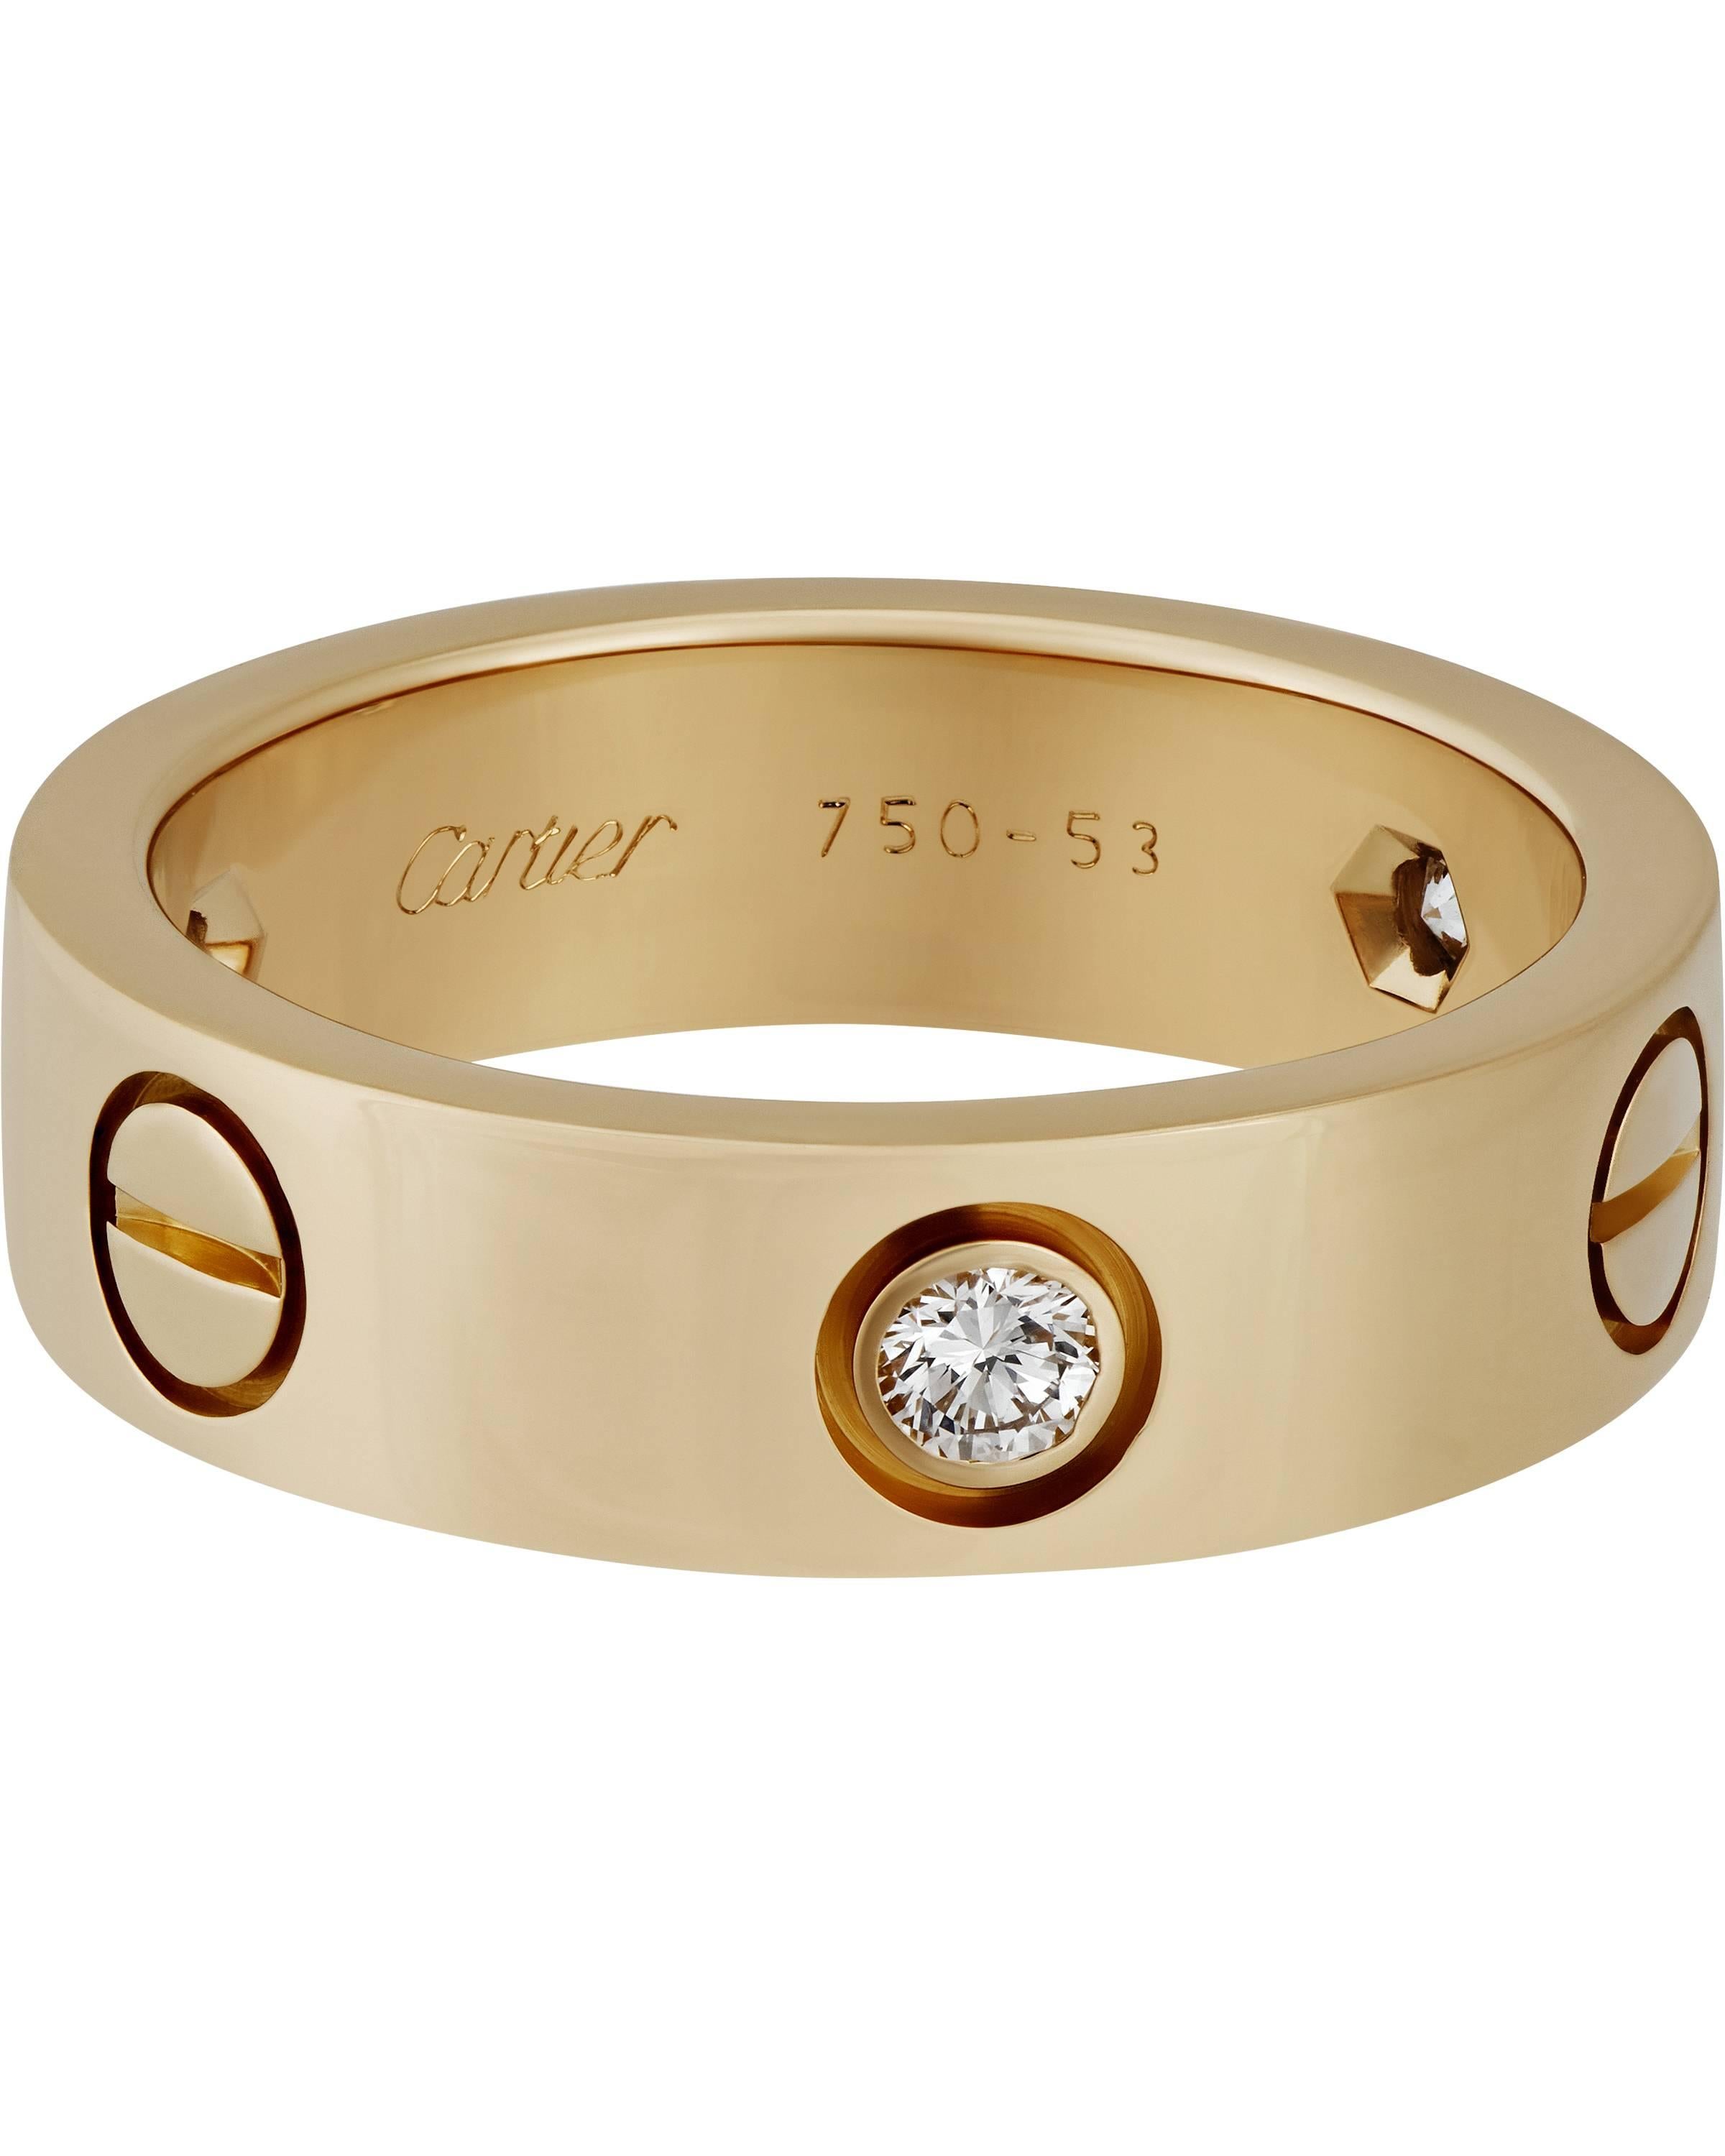 Brand: Cartier
Material: Gold
Metal: 18K Yellow	
Metal Purity: 750	
Main Stone: Diamond
Finger Size 6.75
